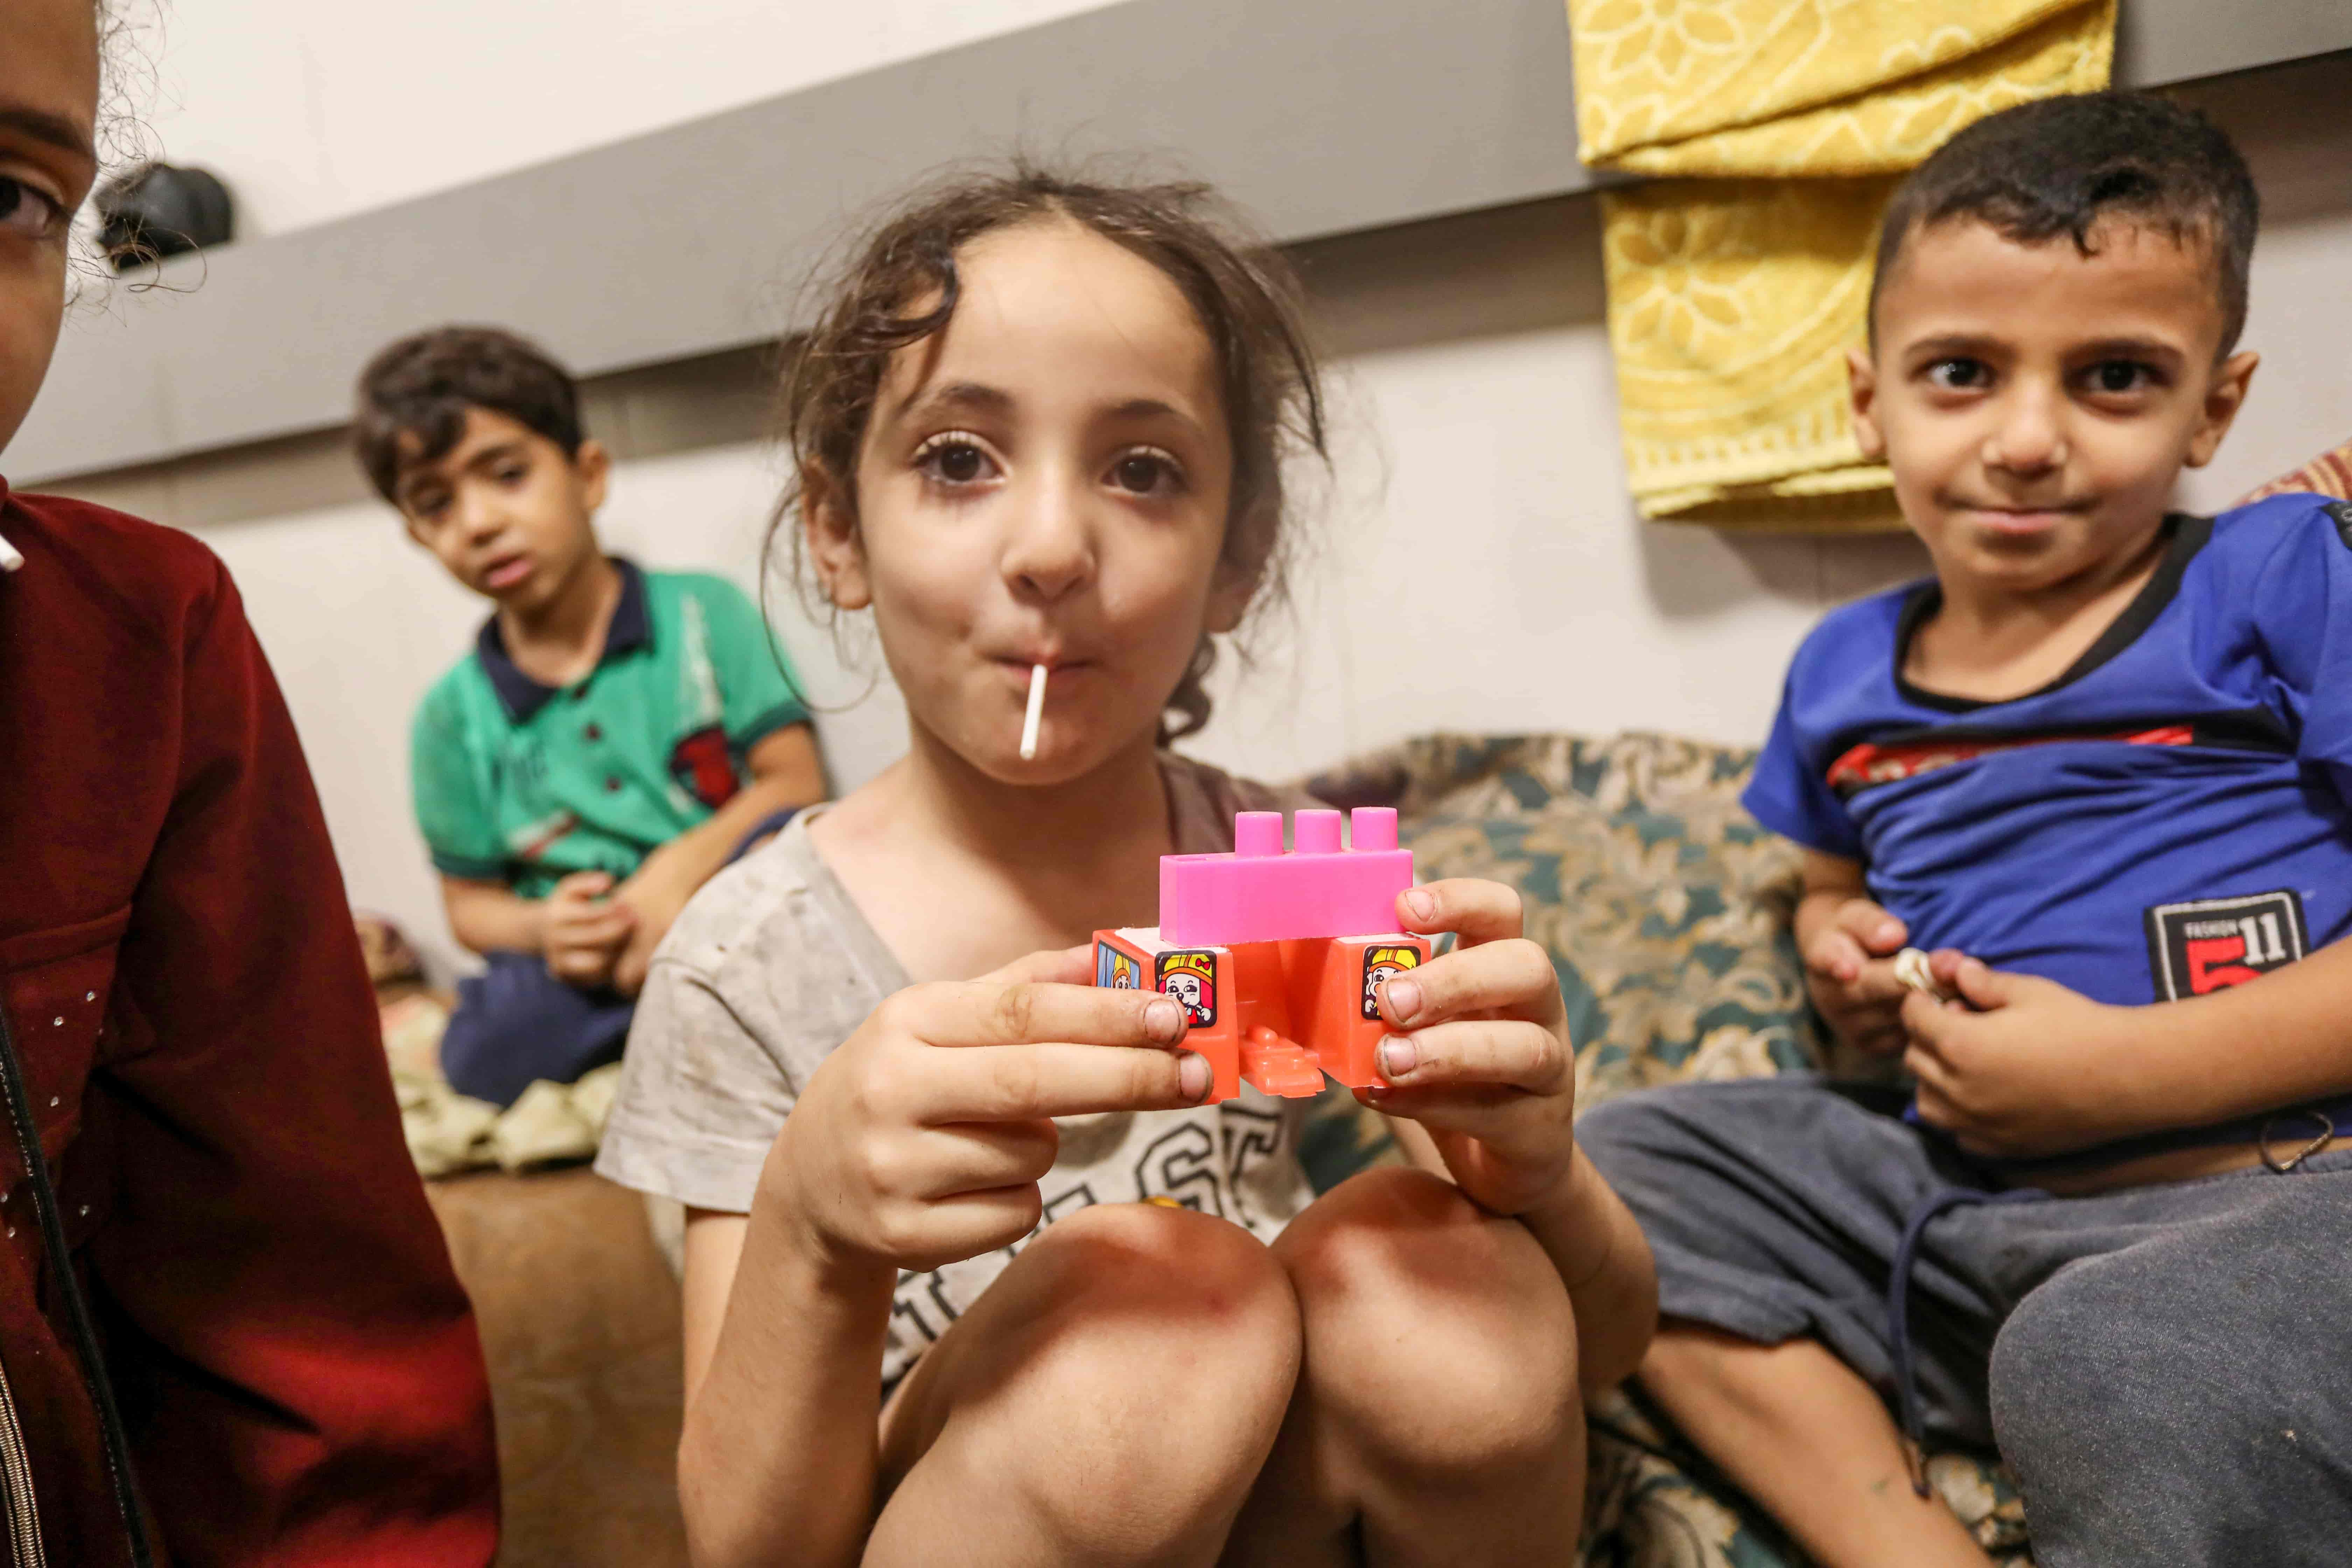 Children make up almost half of the Gaza Strip's 2.3 million population [Abdelhakim Abu Riash/Al Jazeera]